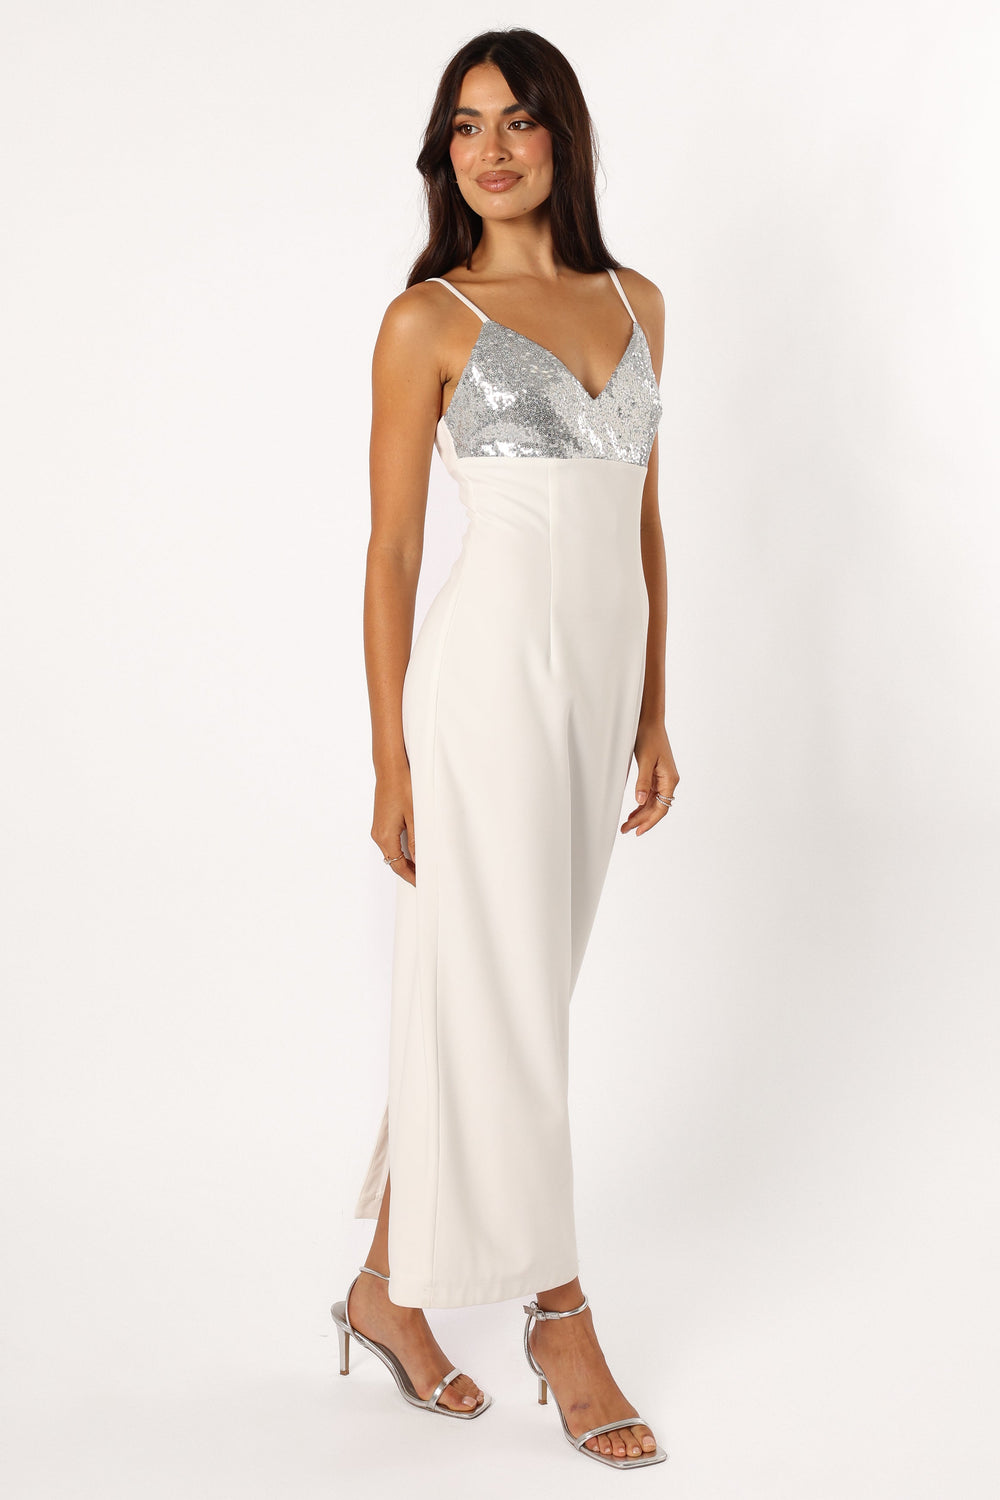 Shop Formal Dress - Kylie Slip Dress - White Silver fourth image